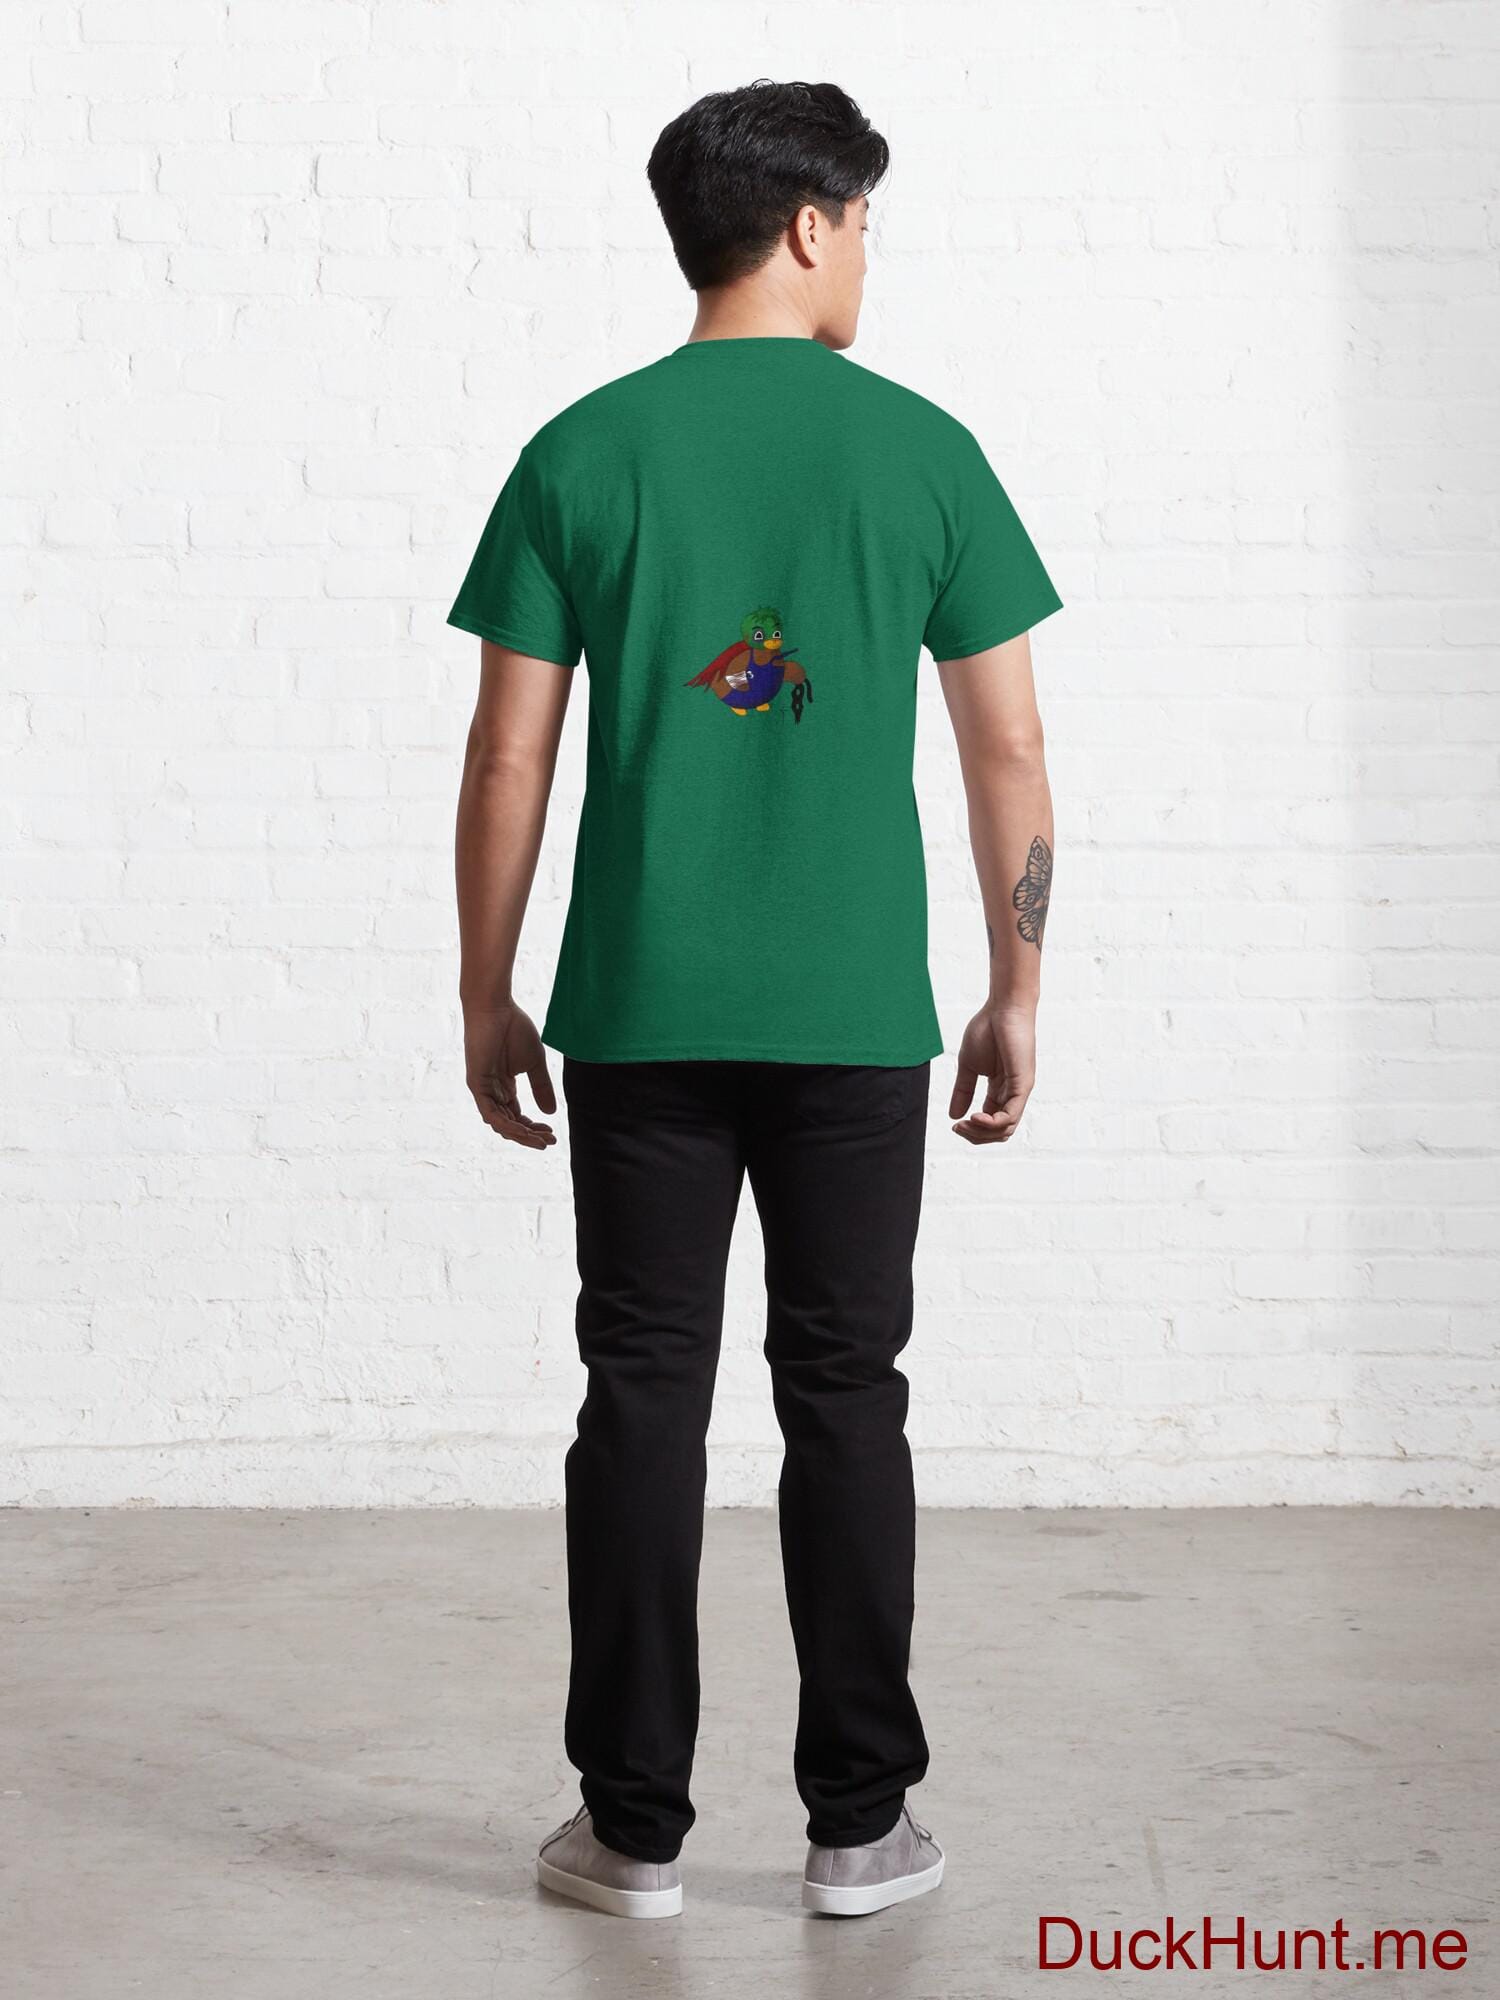 Dead DuckHunt Boss (smokeless) Green Classic T-Shirt (Back printed) alternative image 3